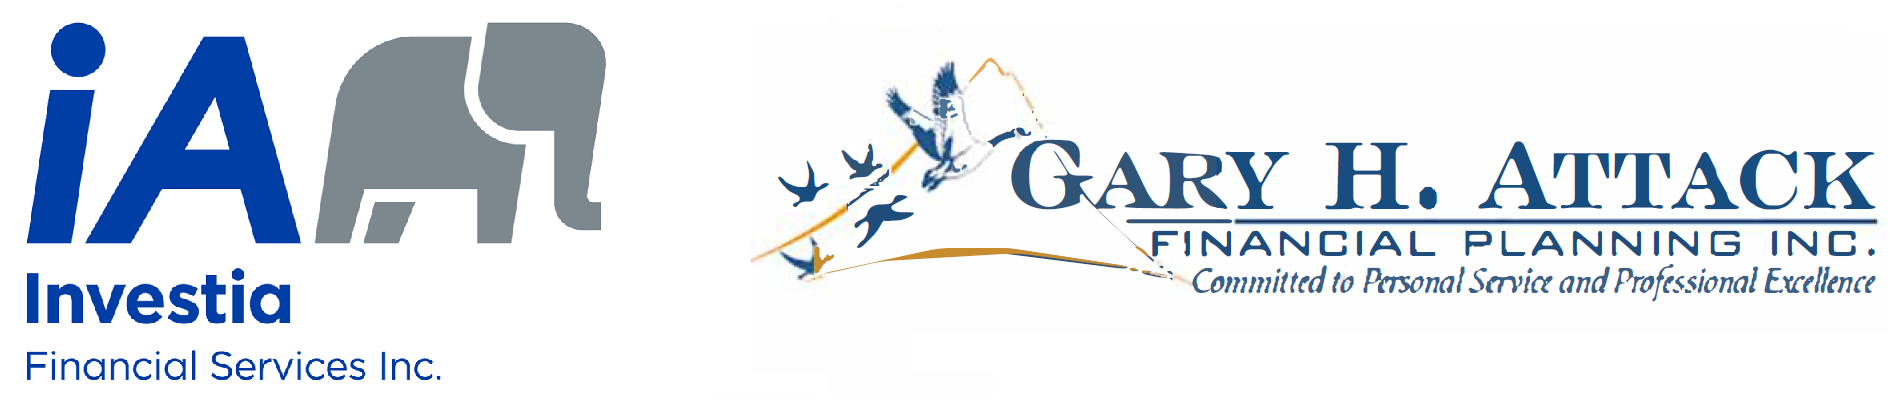 Gary H. Attack Financial Planning Inc. - Logo